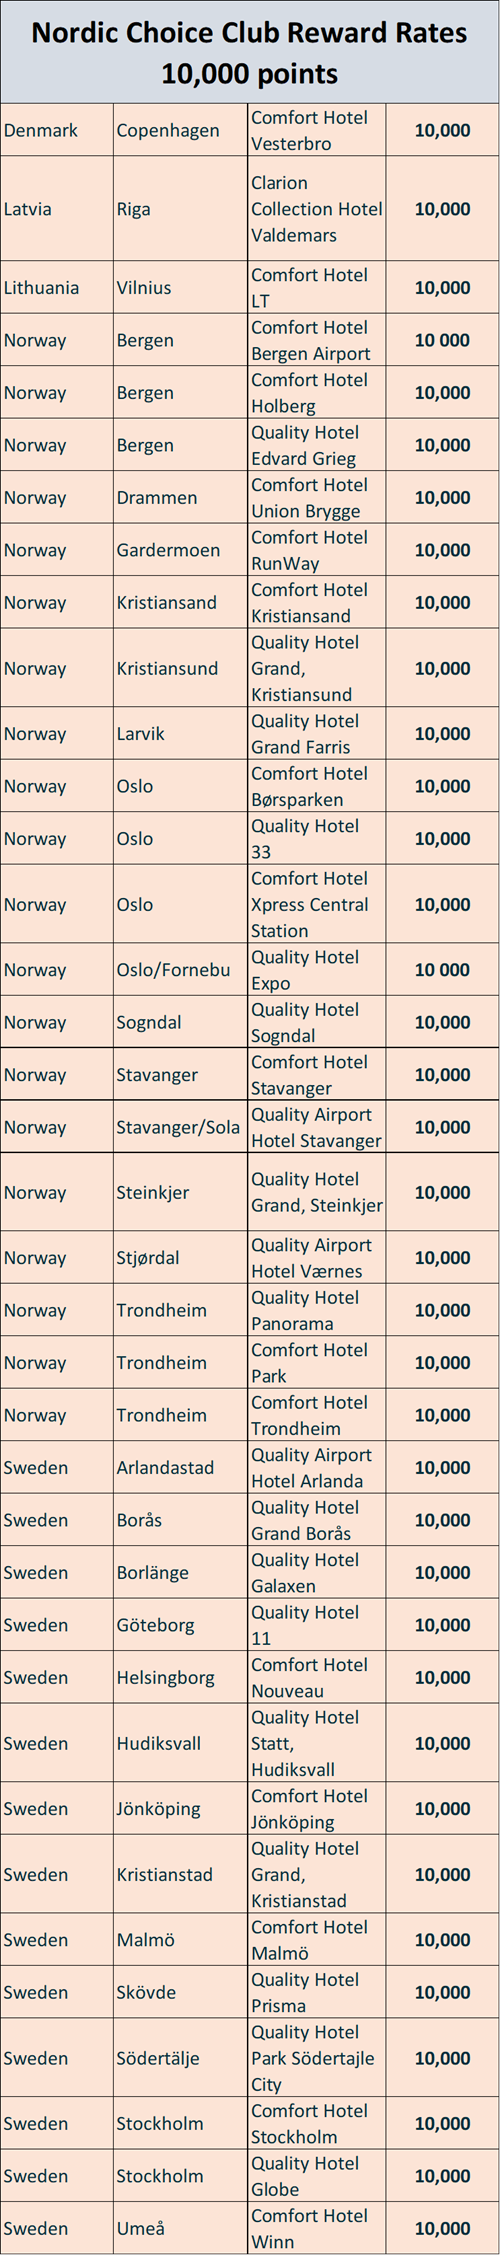 Nordic Choice 10,000 rewards